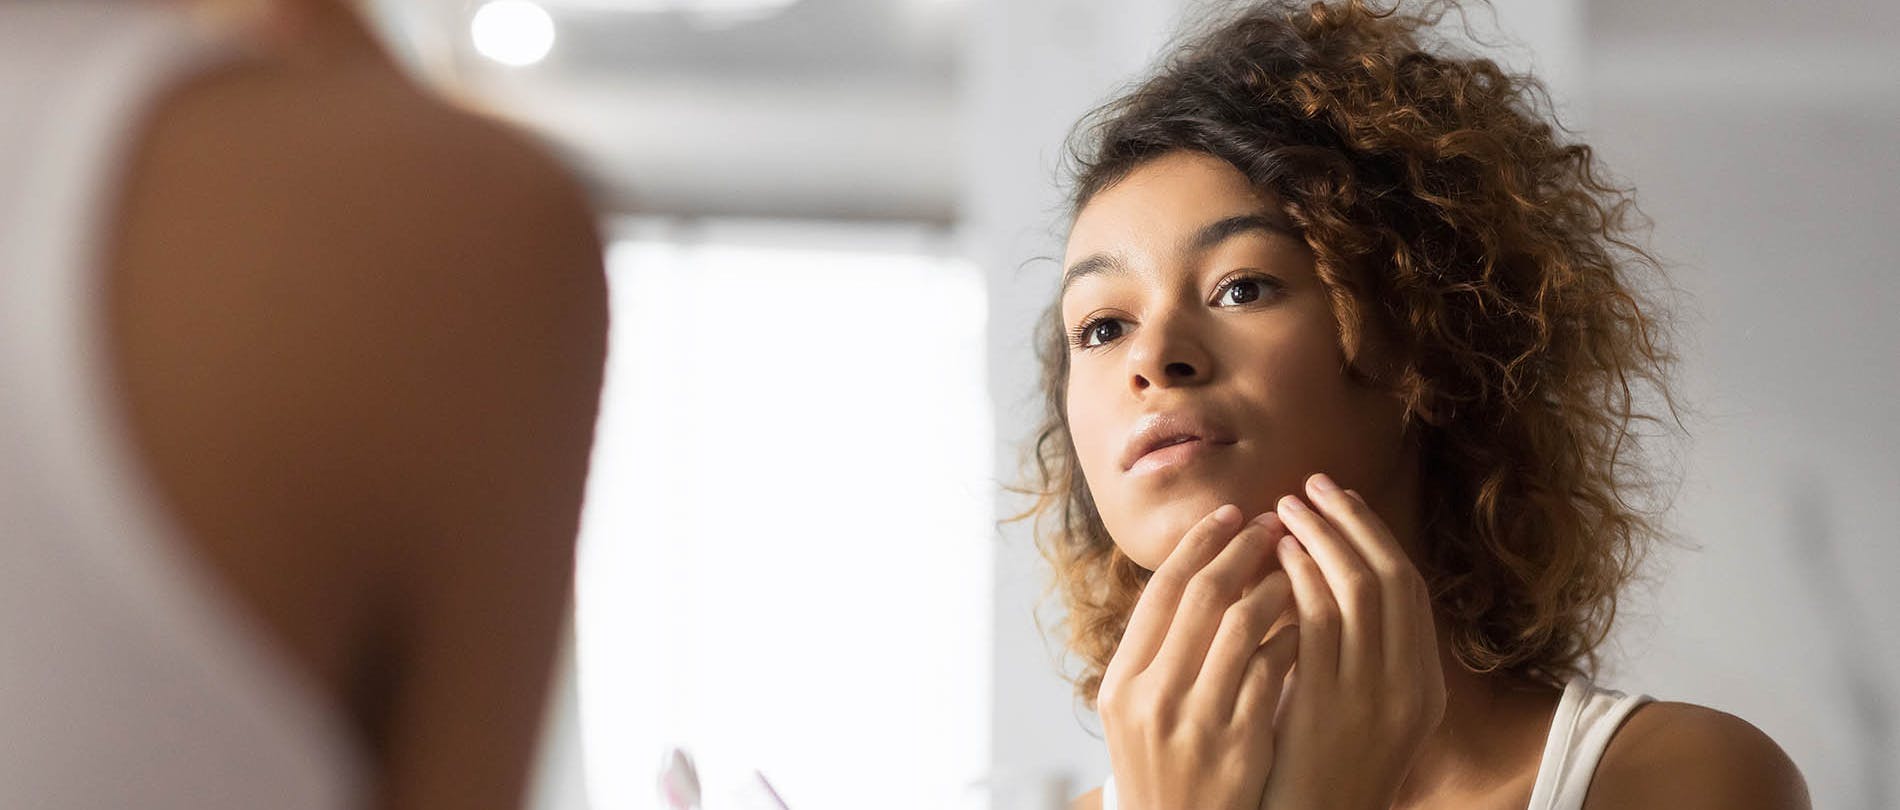 Woman Examines Acne in Mirror